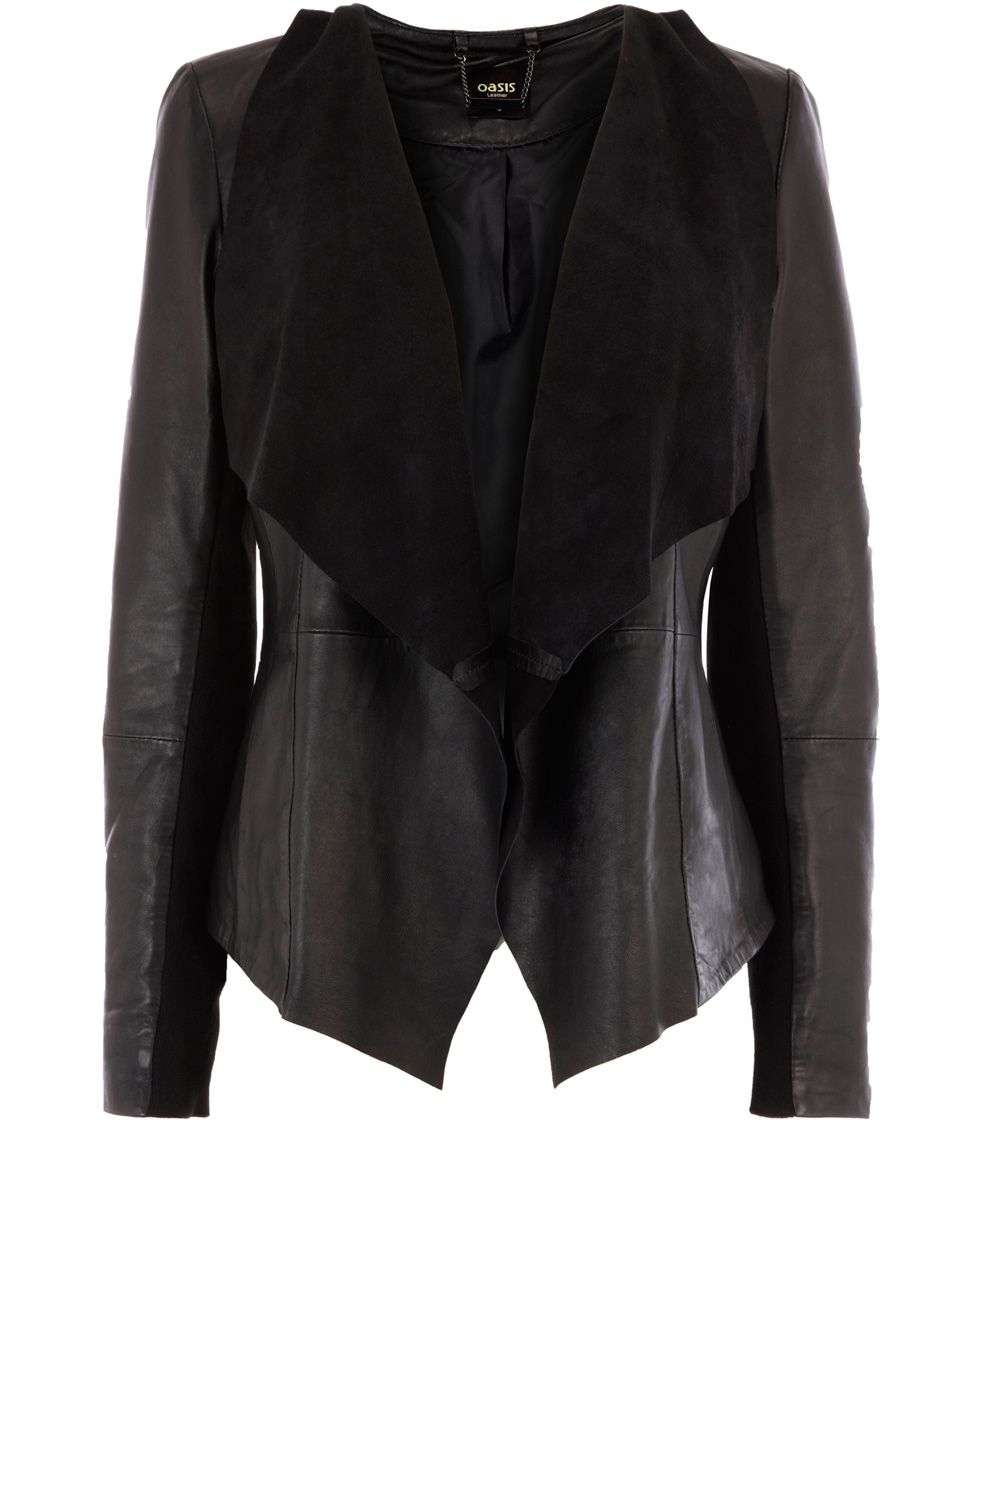 Oasis Waterfall Leather Jacket in Black | Lyst